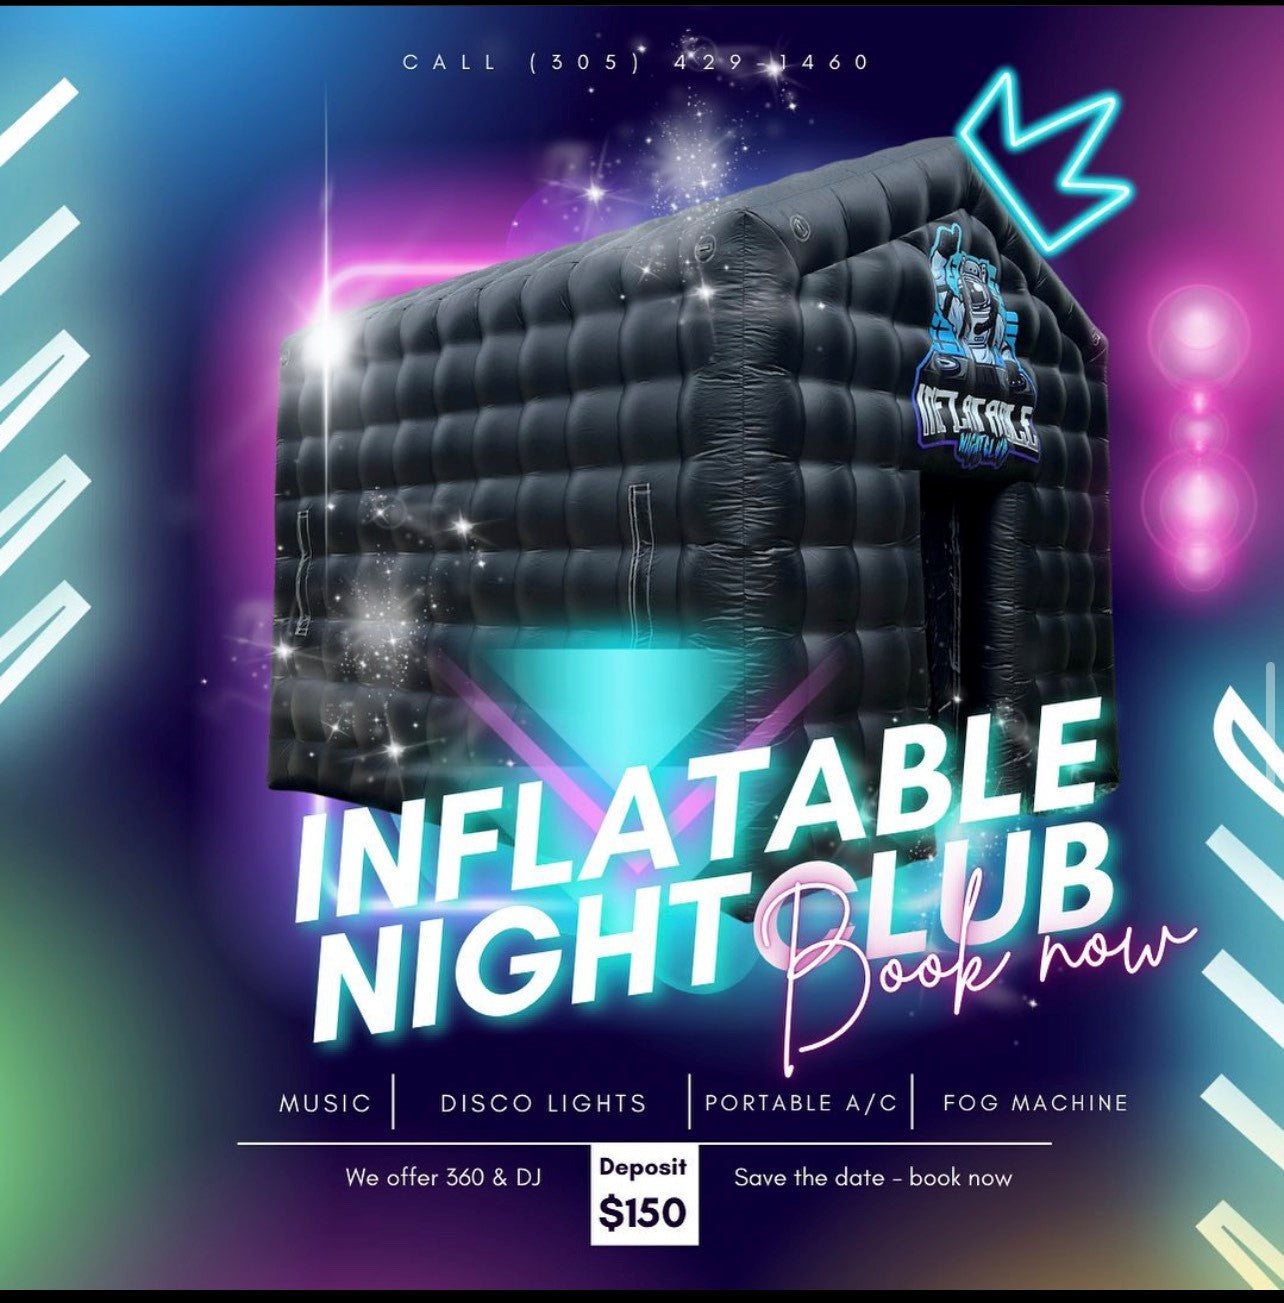 Inflatable Nightclub (SMALL) DEPOSIT, Miami ATV Tour